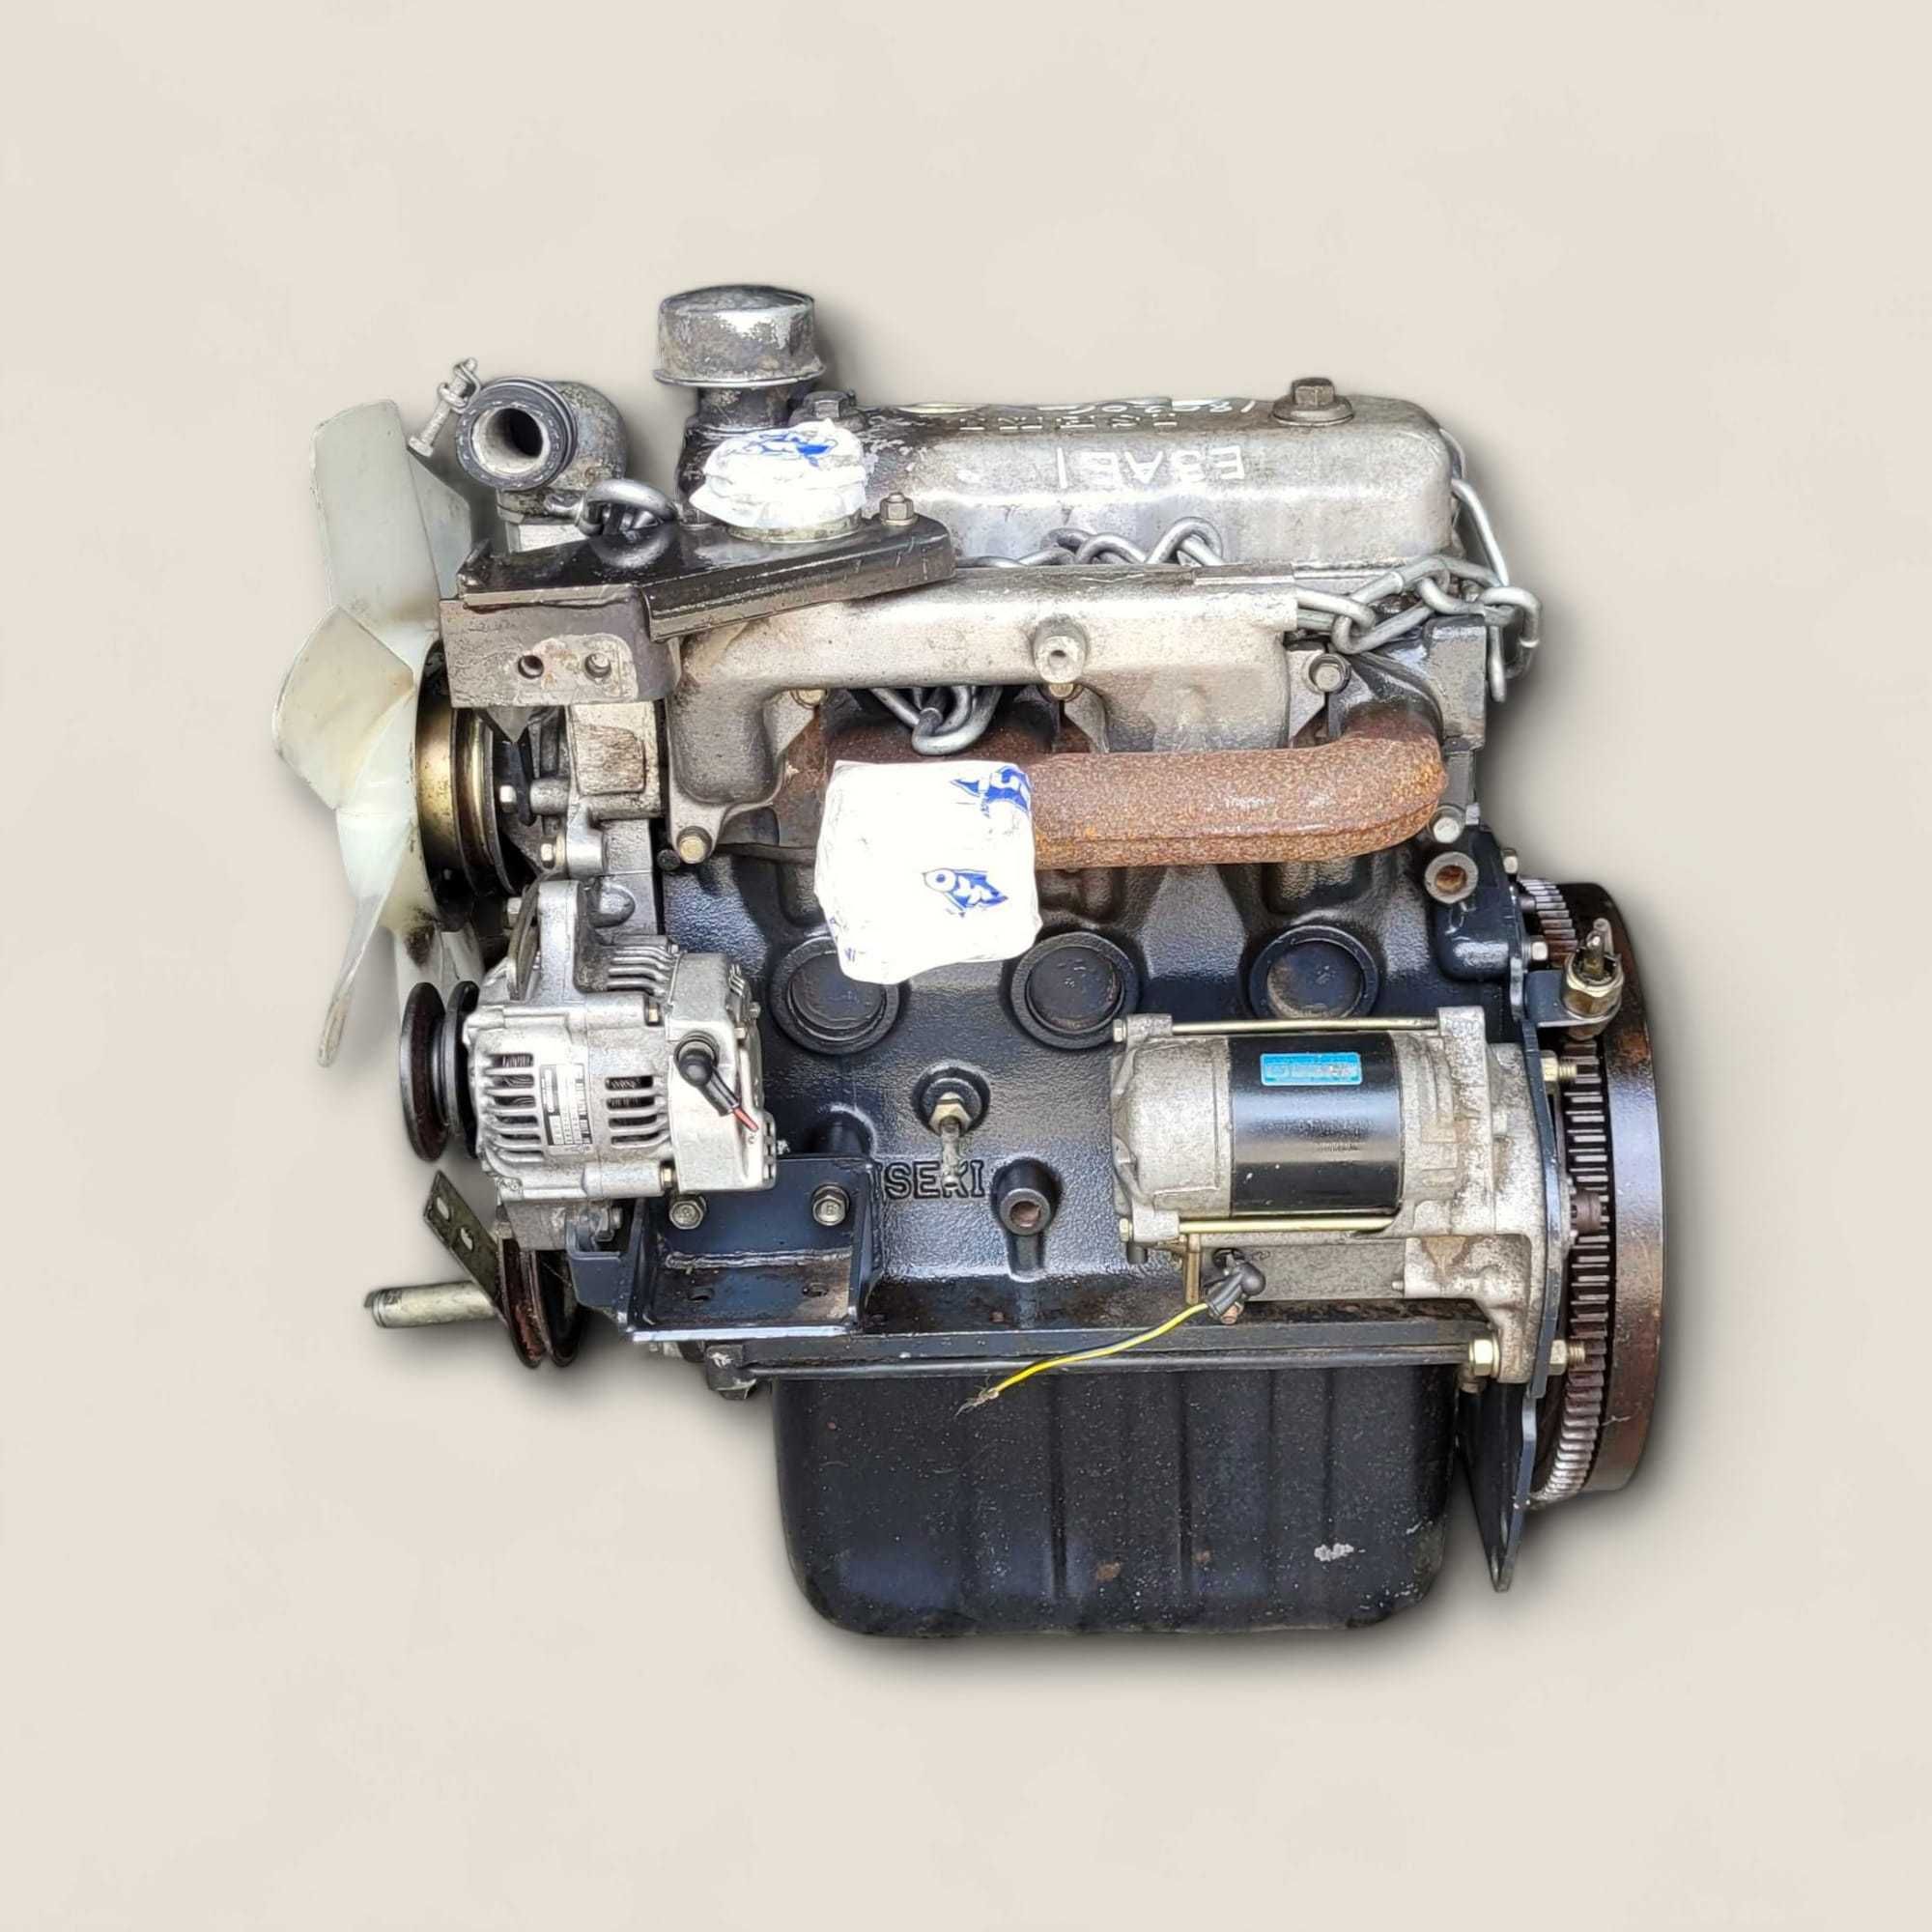 Motor complet Iseki E3AE1